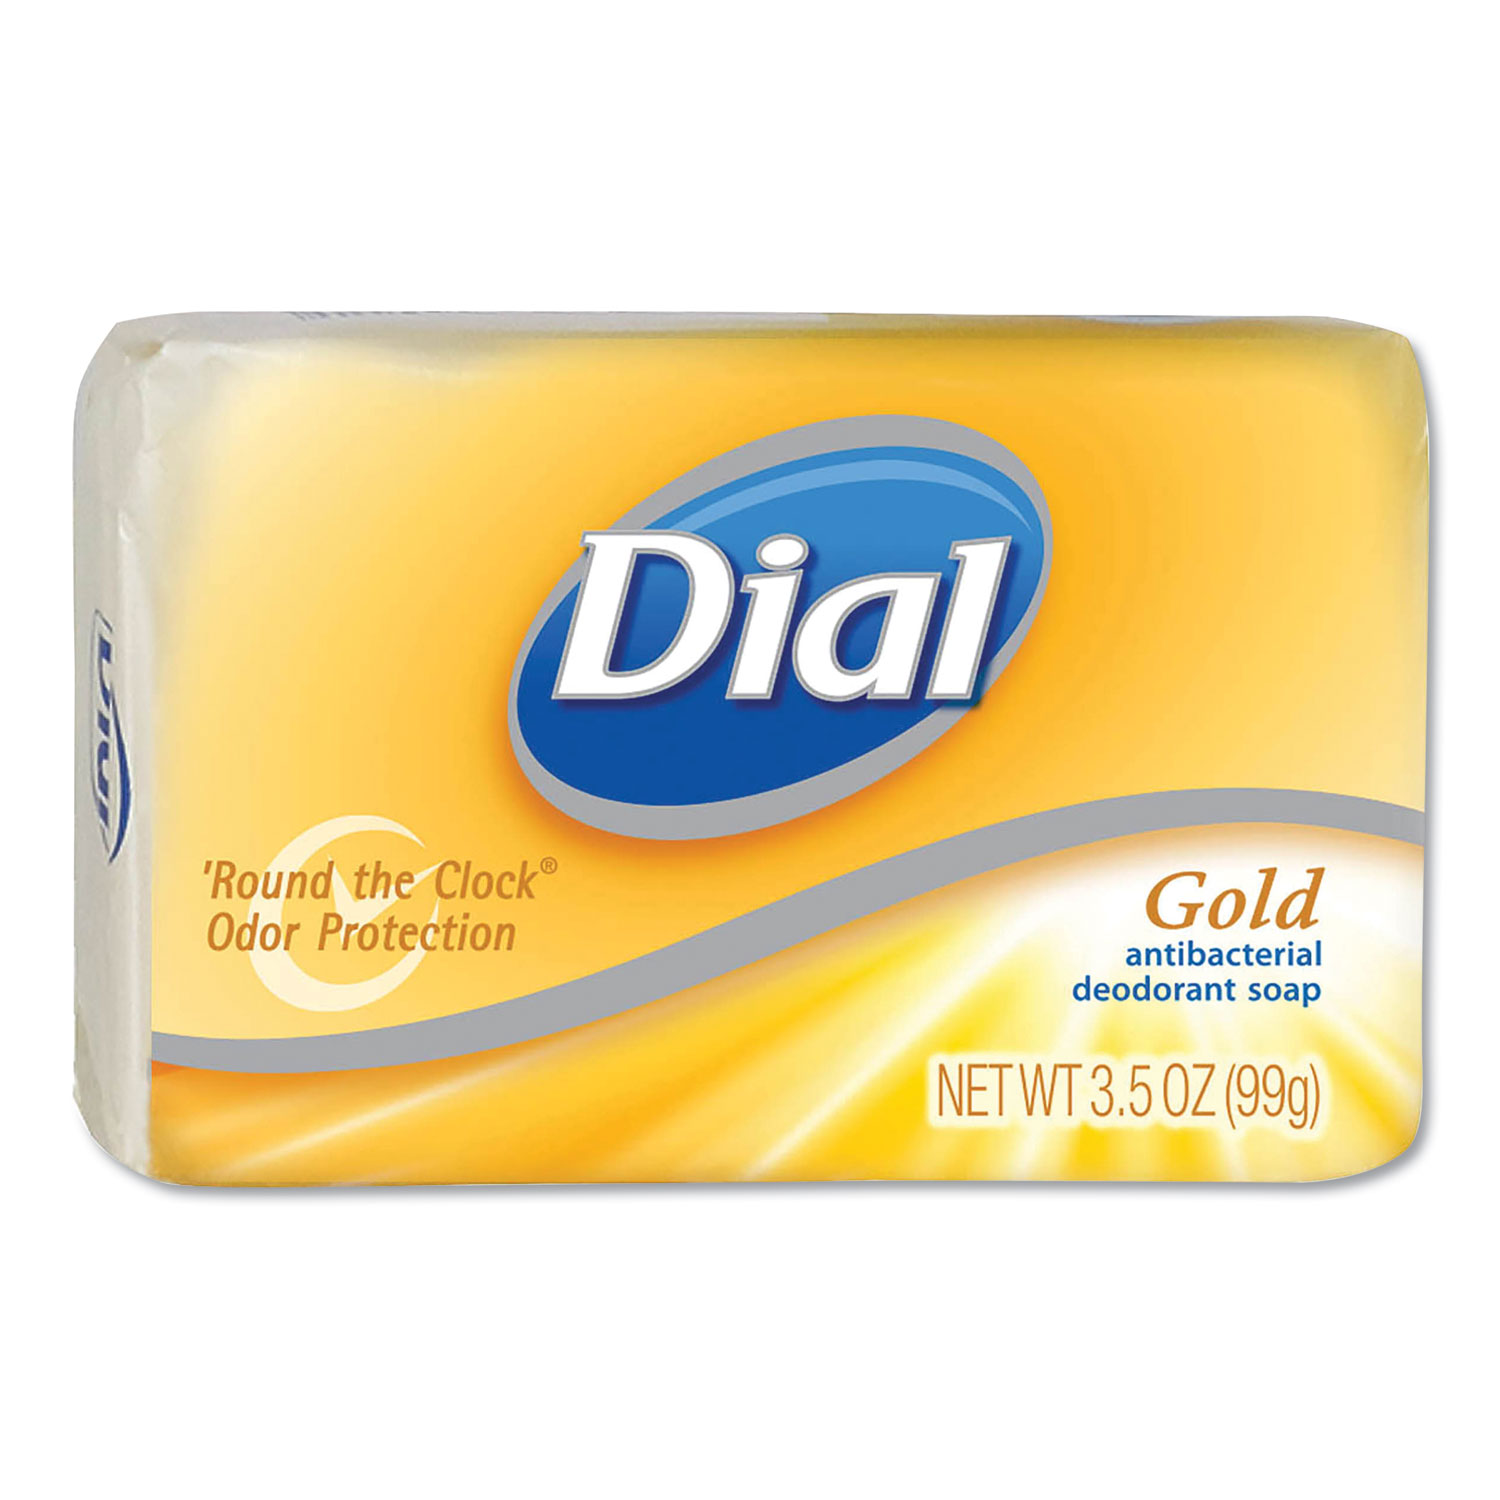  Dial 2401 Deodorant Bar Soap, Pleasant, Gold, 4oz Bar, 72/Carton (DIA02401) 